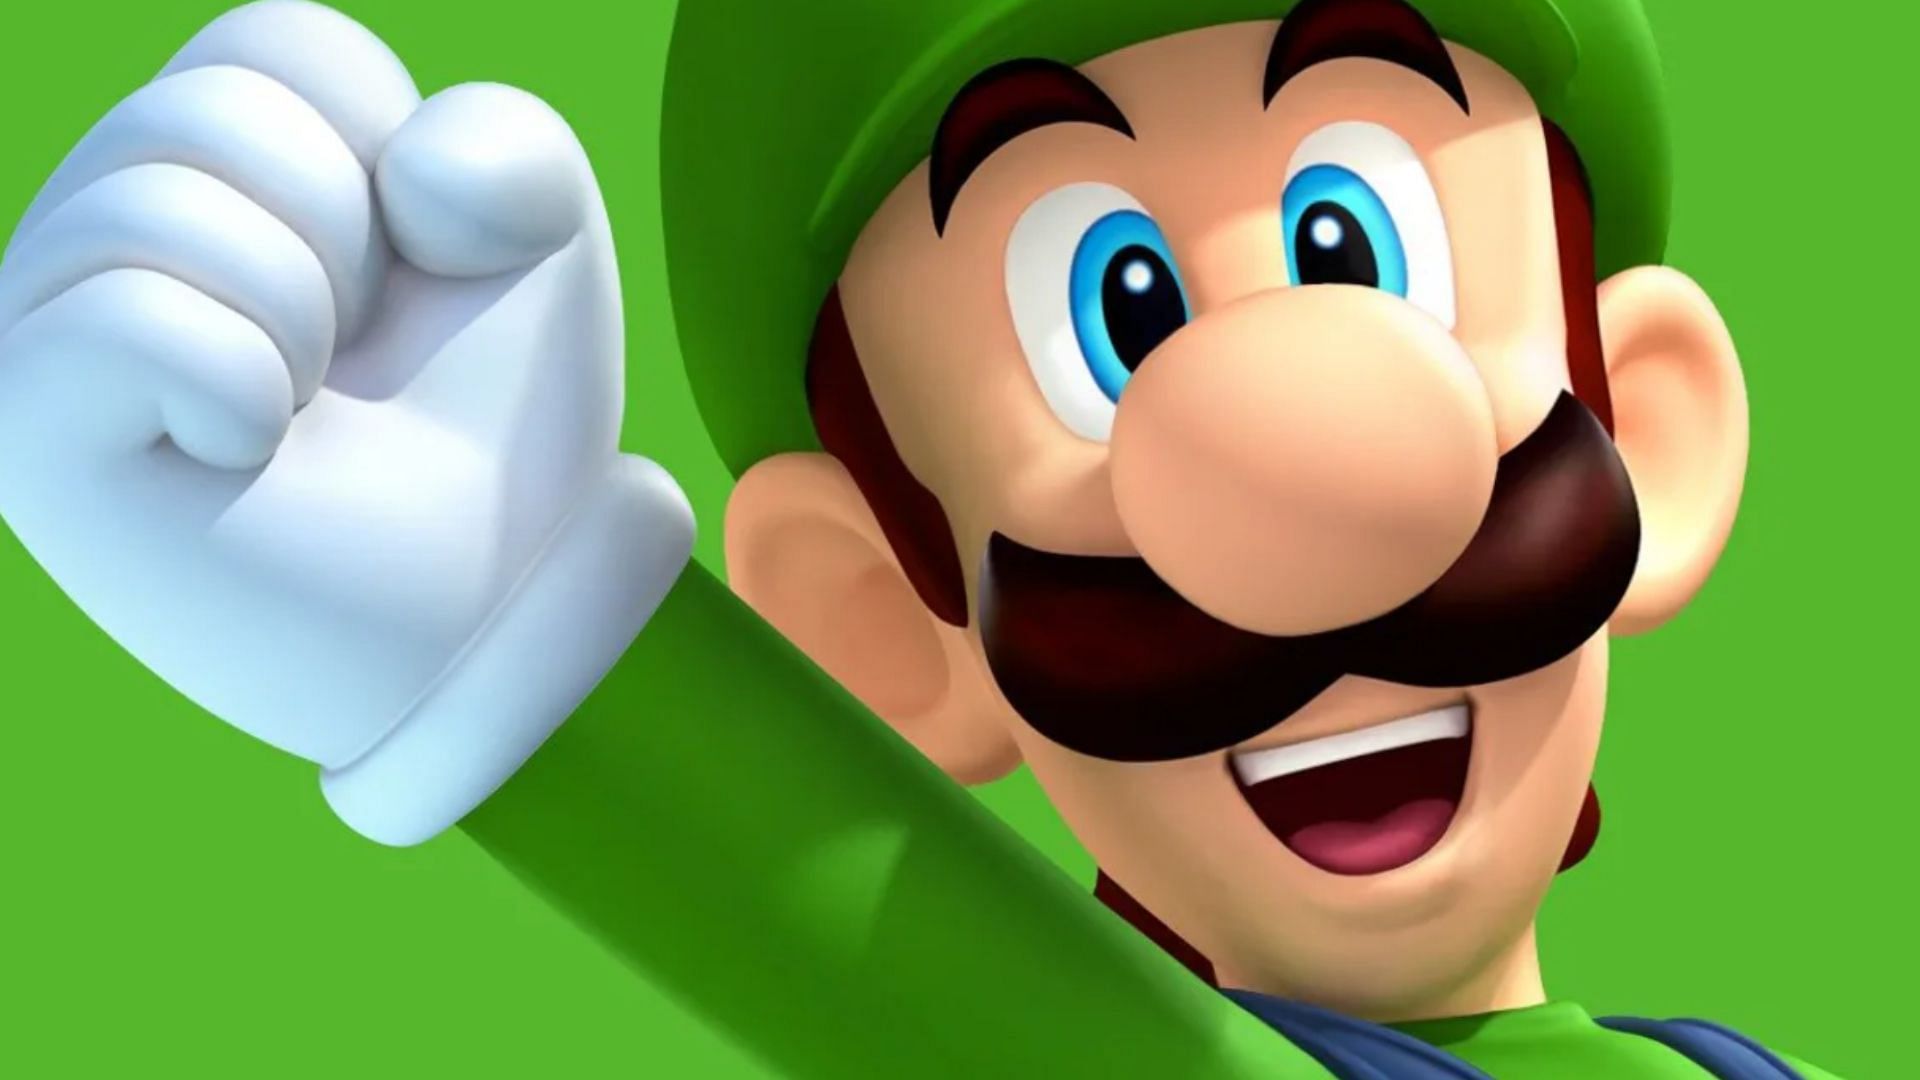 Luigi is the brother of Mario (Image via Nintendo)